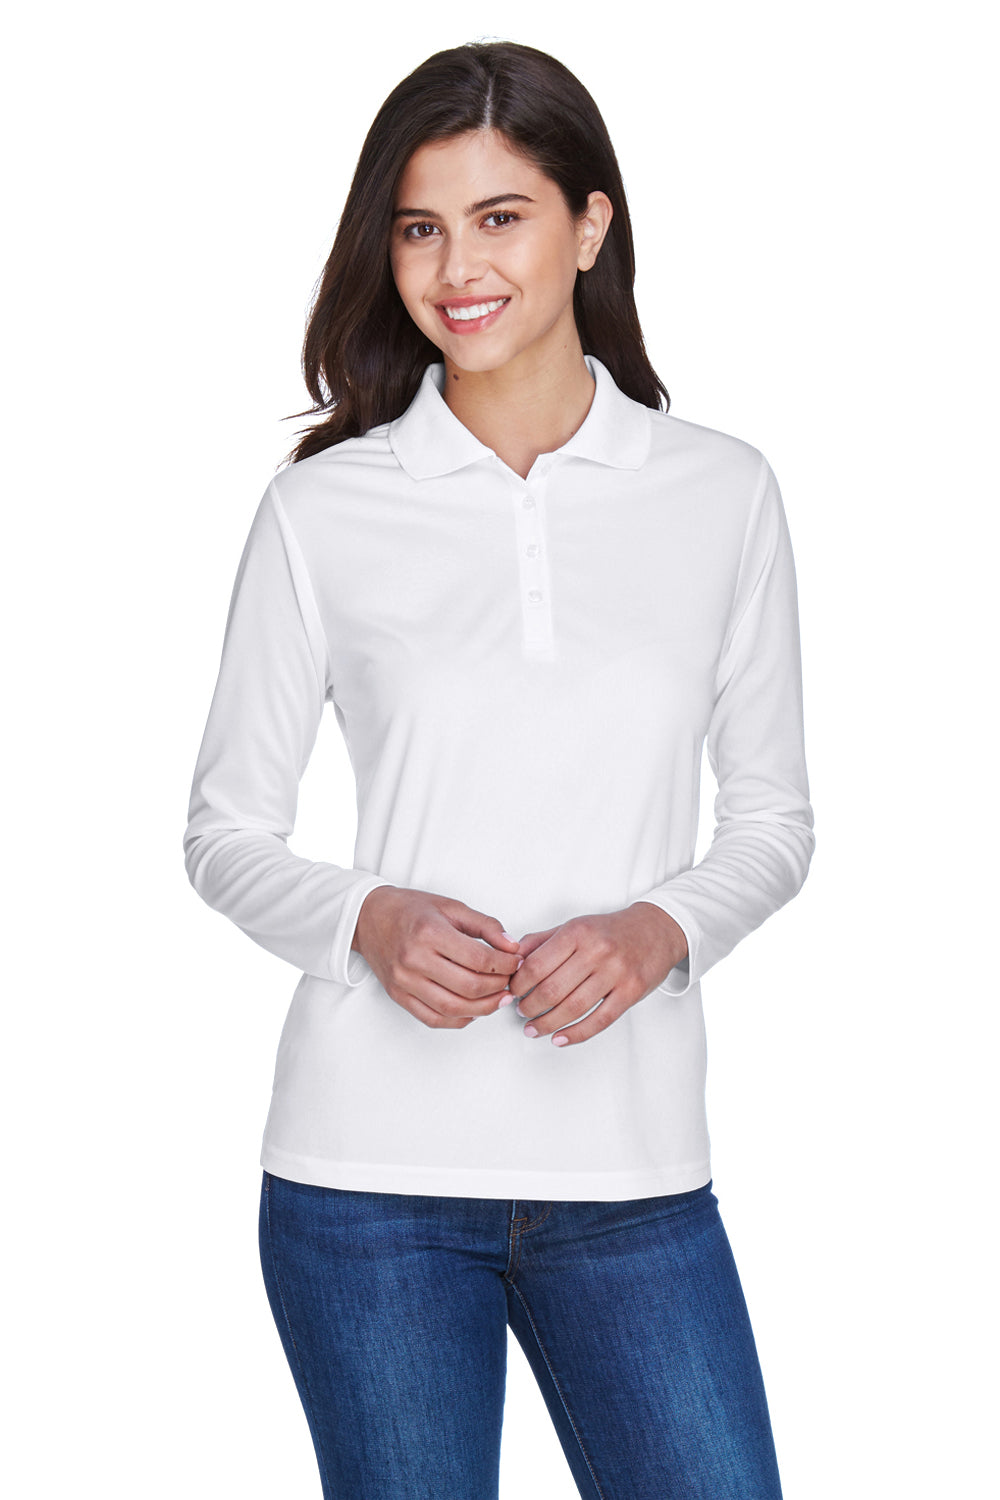 Core 365 Womens Pinnacle Performance Moisture Wicking Long Sleeve Polo  Shirt - White